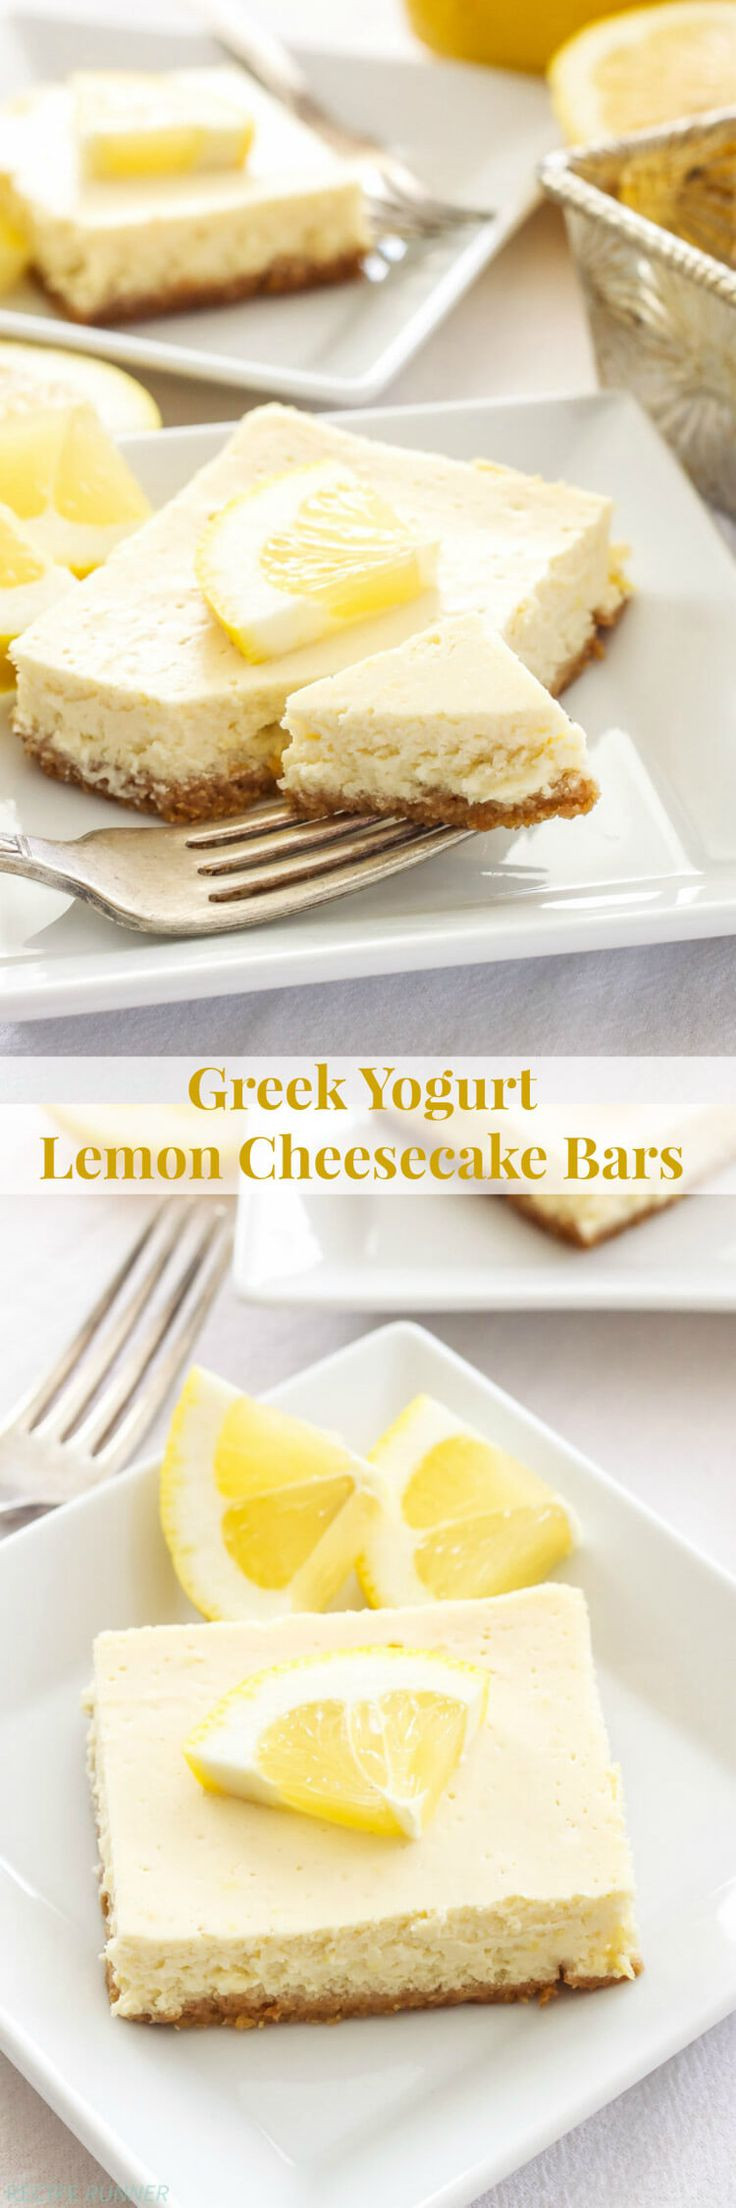 Healthy Lemon Desserts
 17 Best ideas about Healthy Lemon Desserts on Pinterest